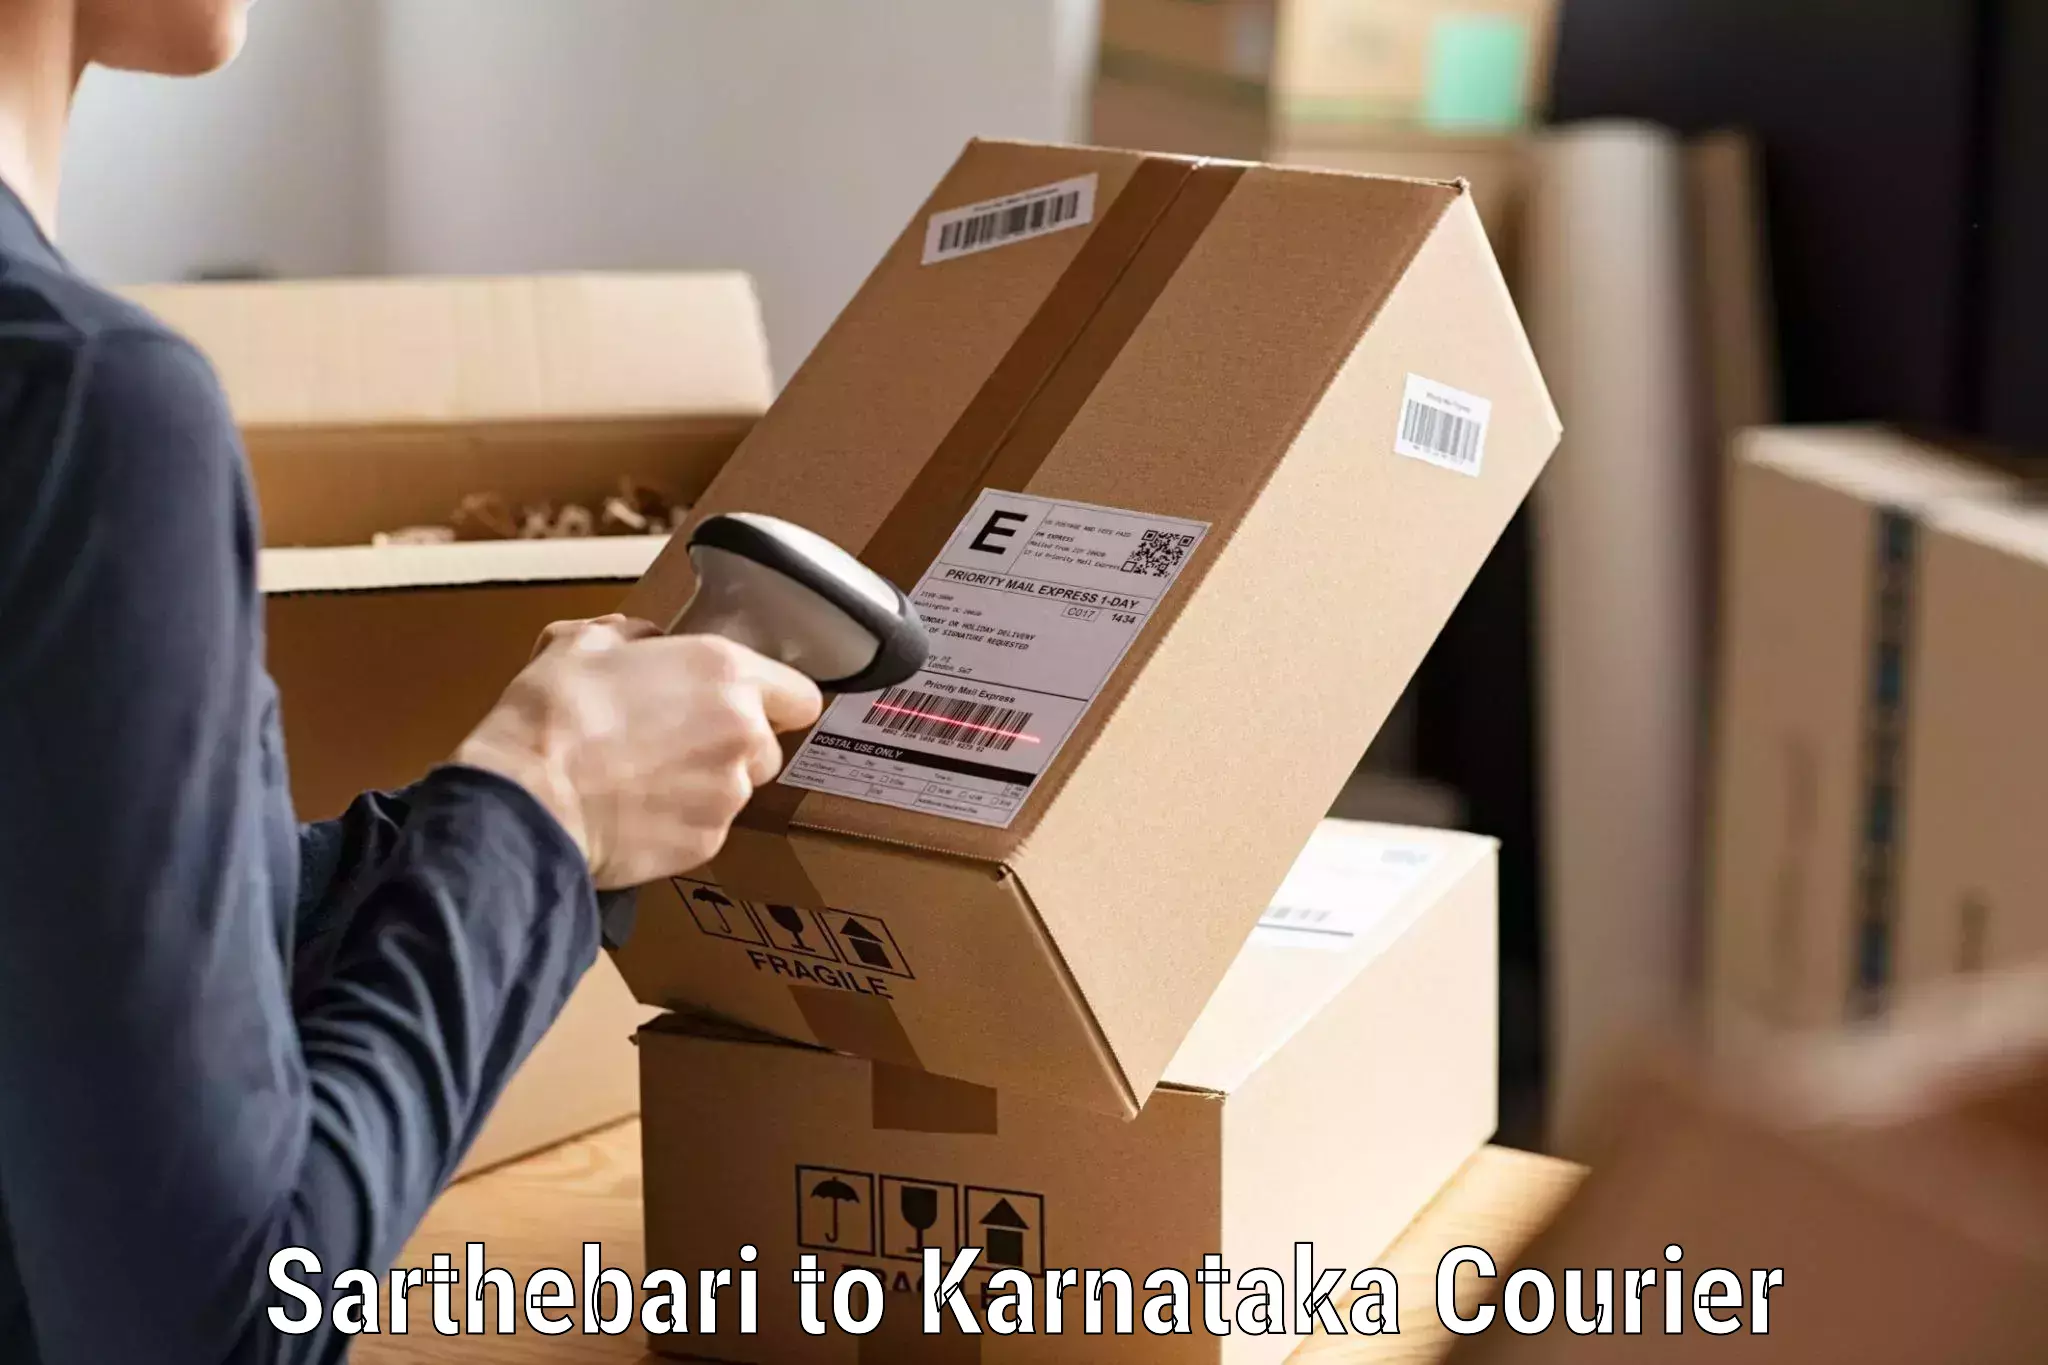 Optimized delivery routes in Sarthebari to Karnataka